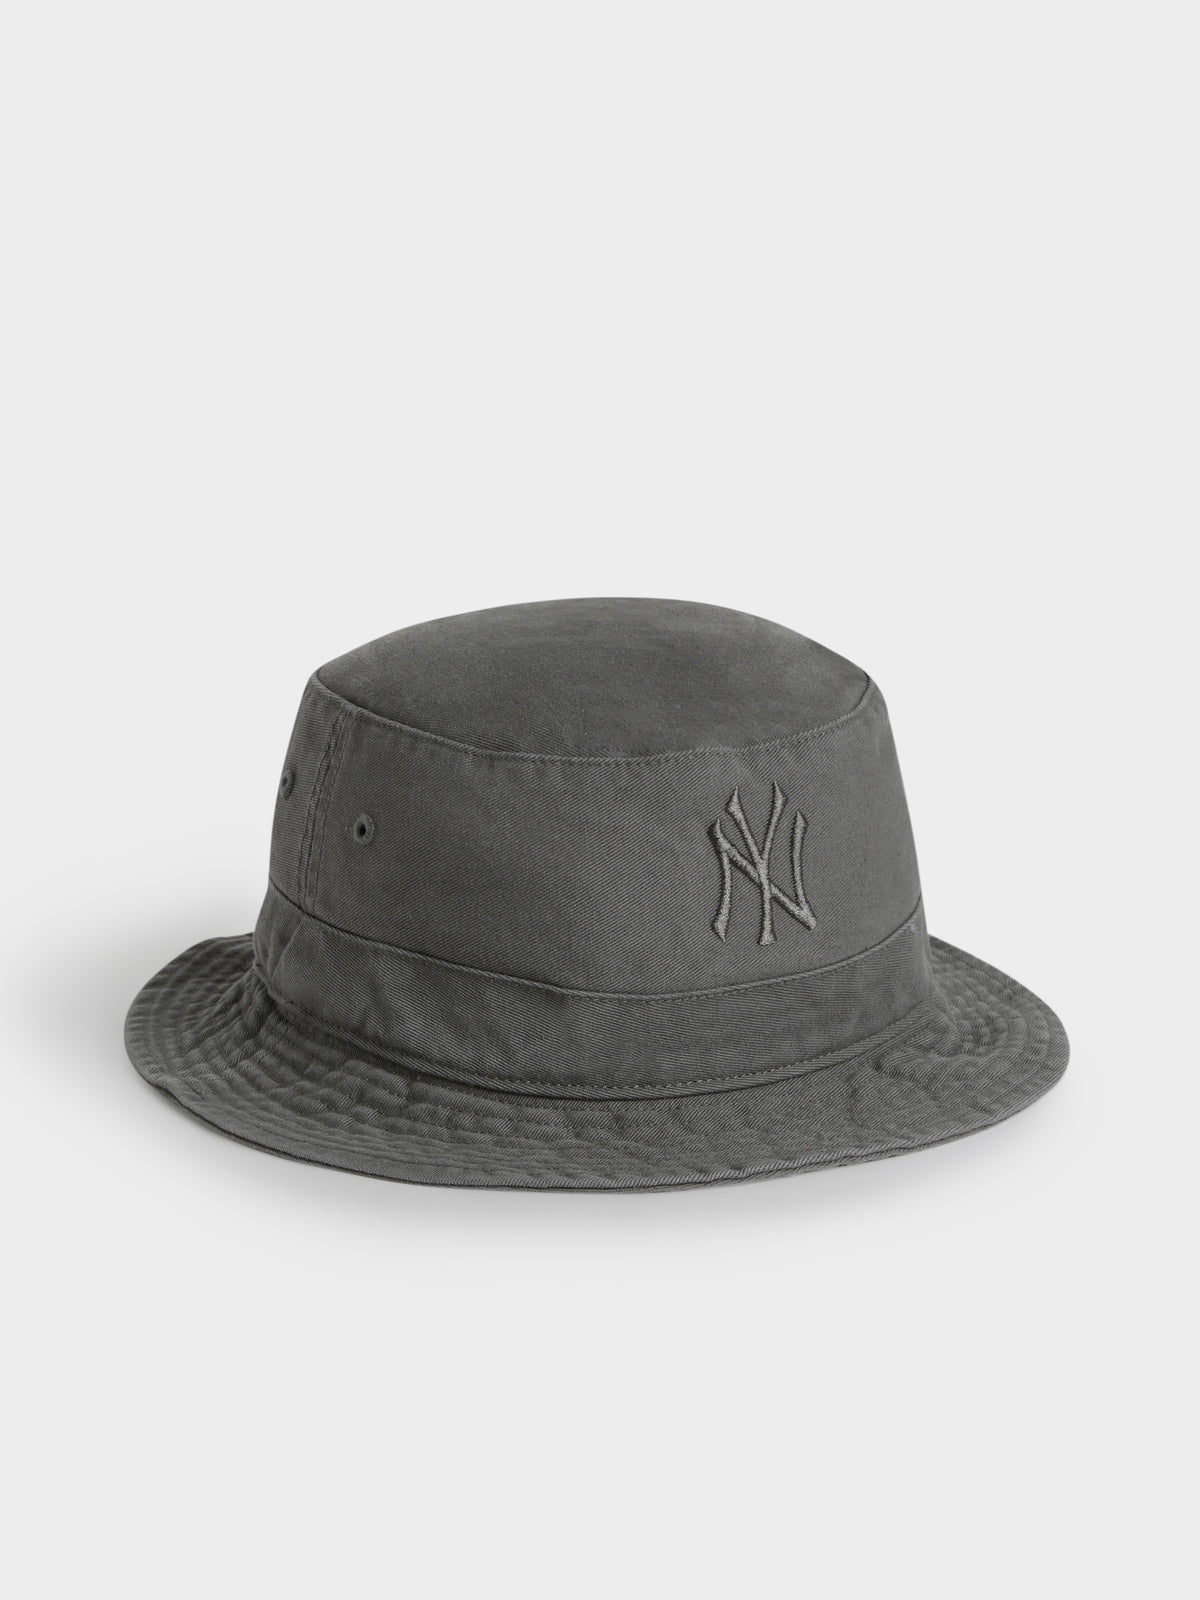 New York Yankees Bucket Hat in Dark Grey